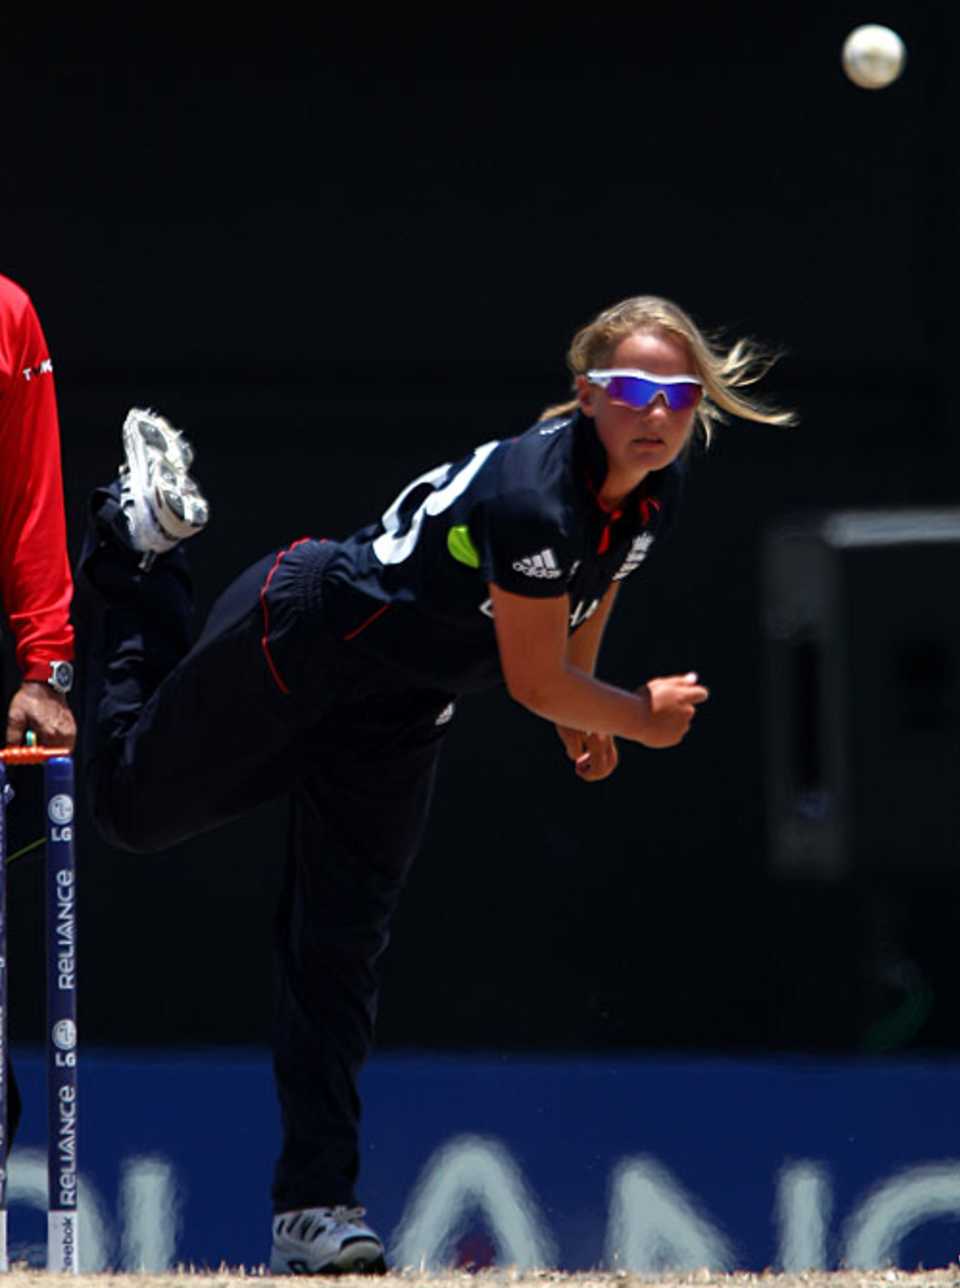 Danielle Wyatt bowls during her spell of 4 for 11 against South Africa